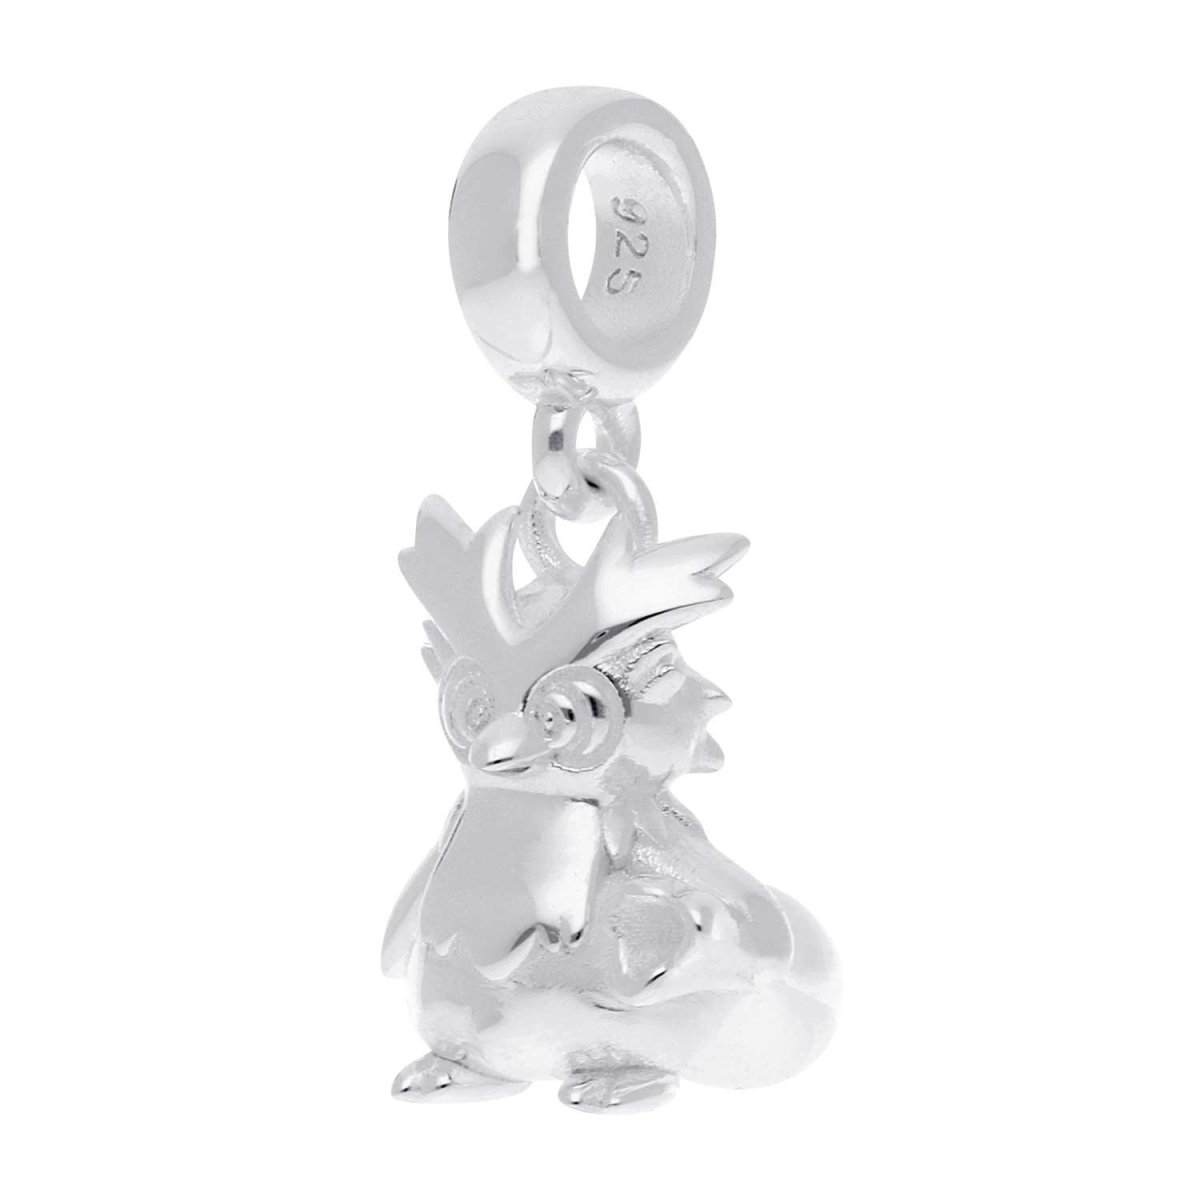 Pokémon Jewelry - Charms: Cyndaquil Sterling Silver Dangle Charm